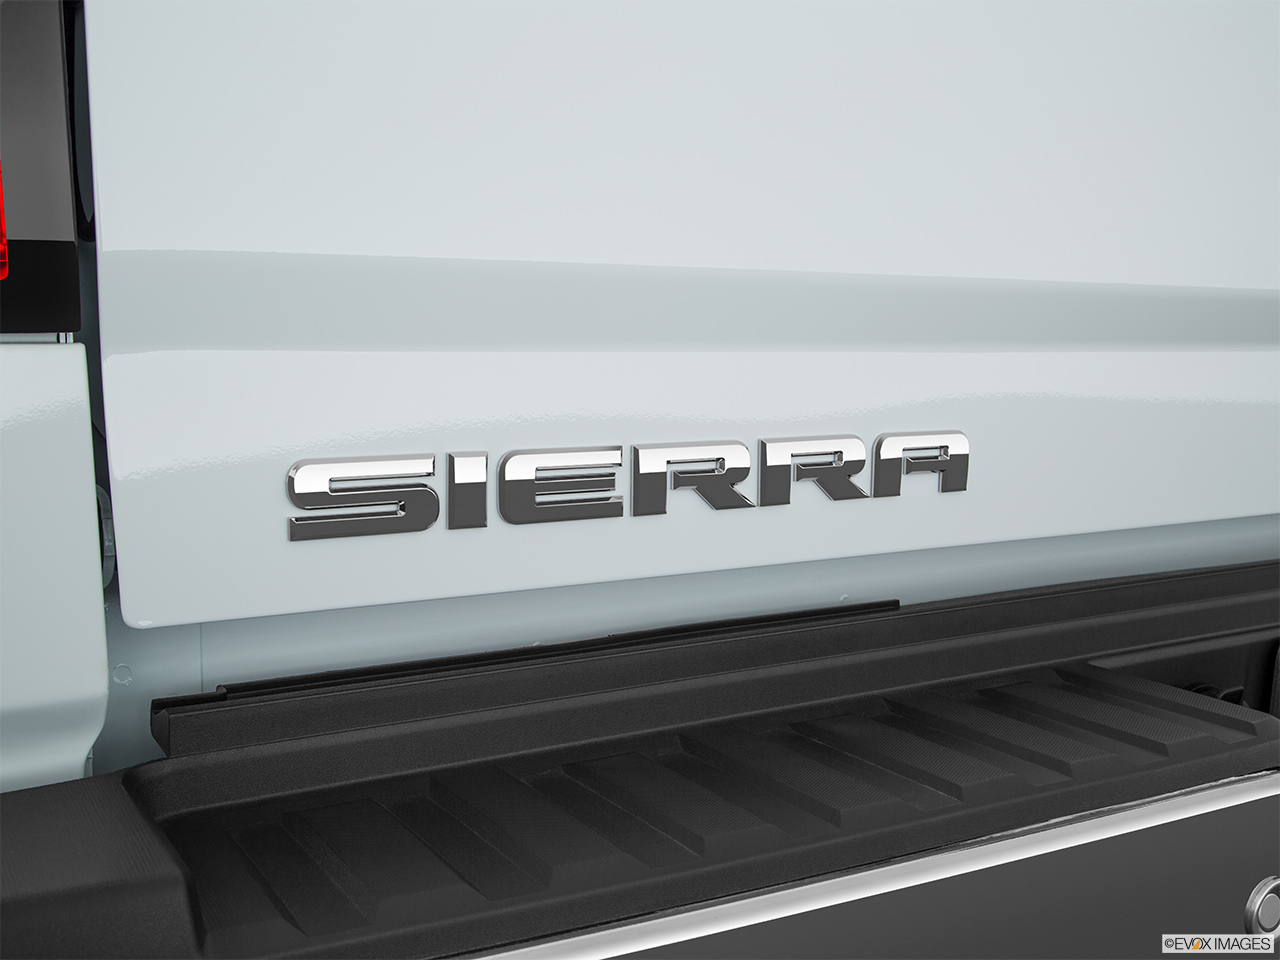 2019 GMC Sierra 2500HD SLT Rear model badge/emblem 